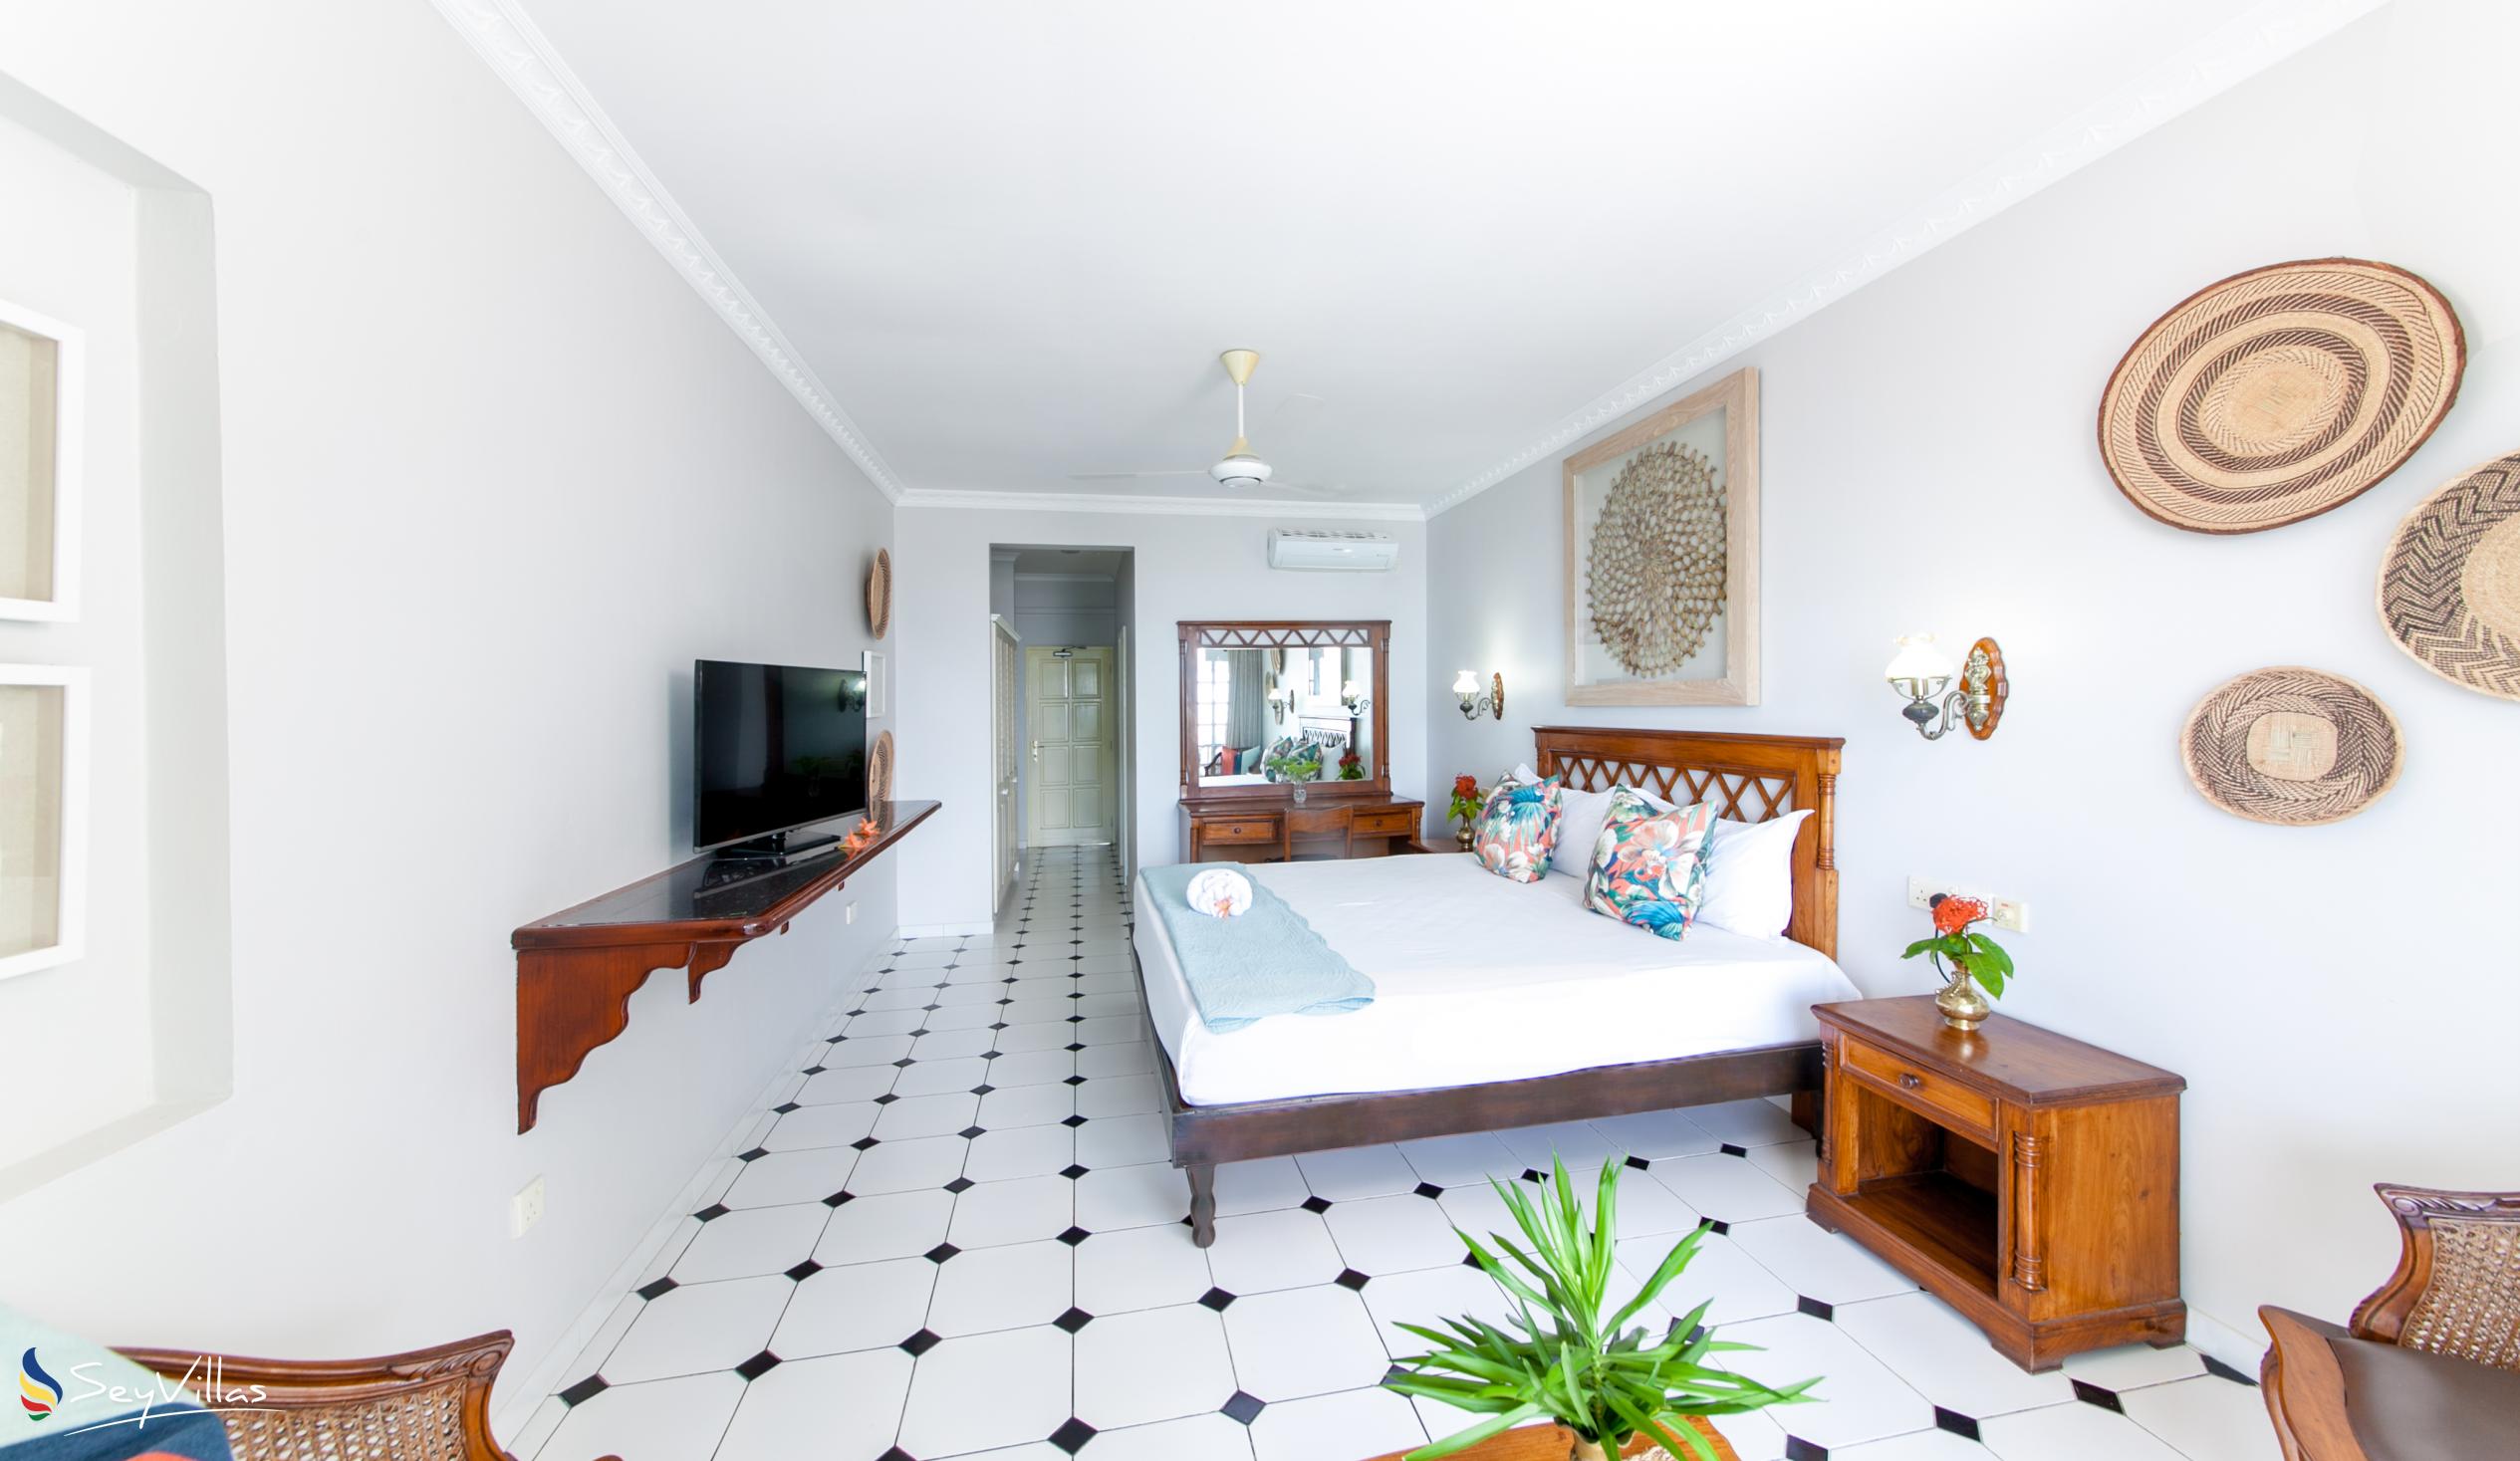 Foto 45: Palm Beach Hotel - Camera Deluxe - Praslin (Seychelles)